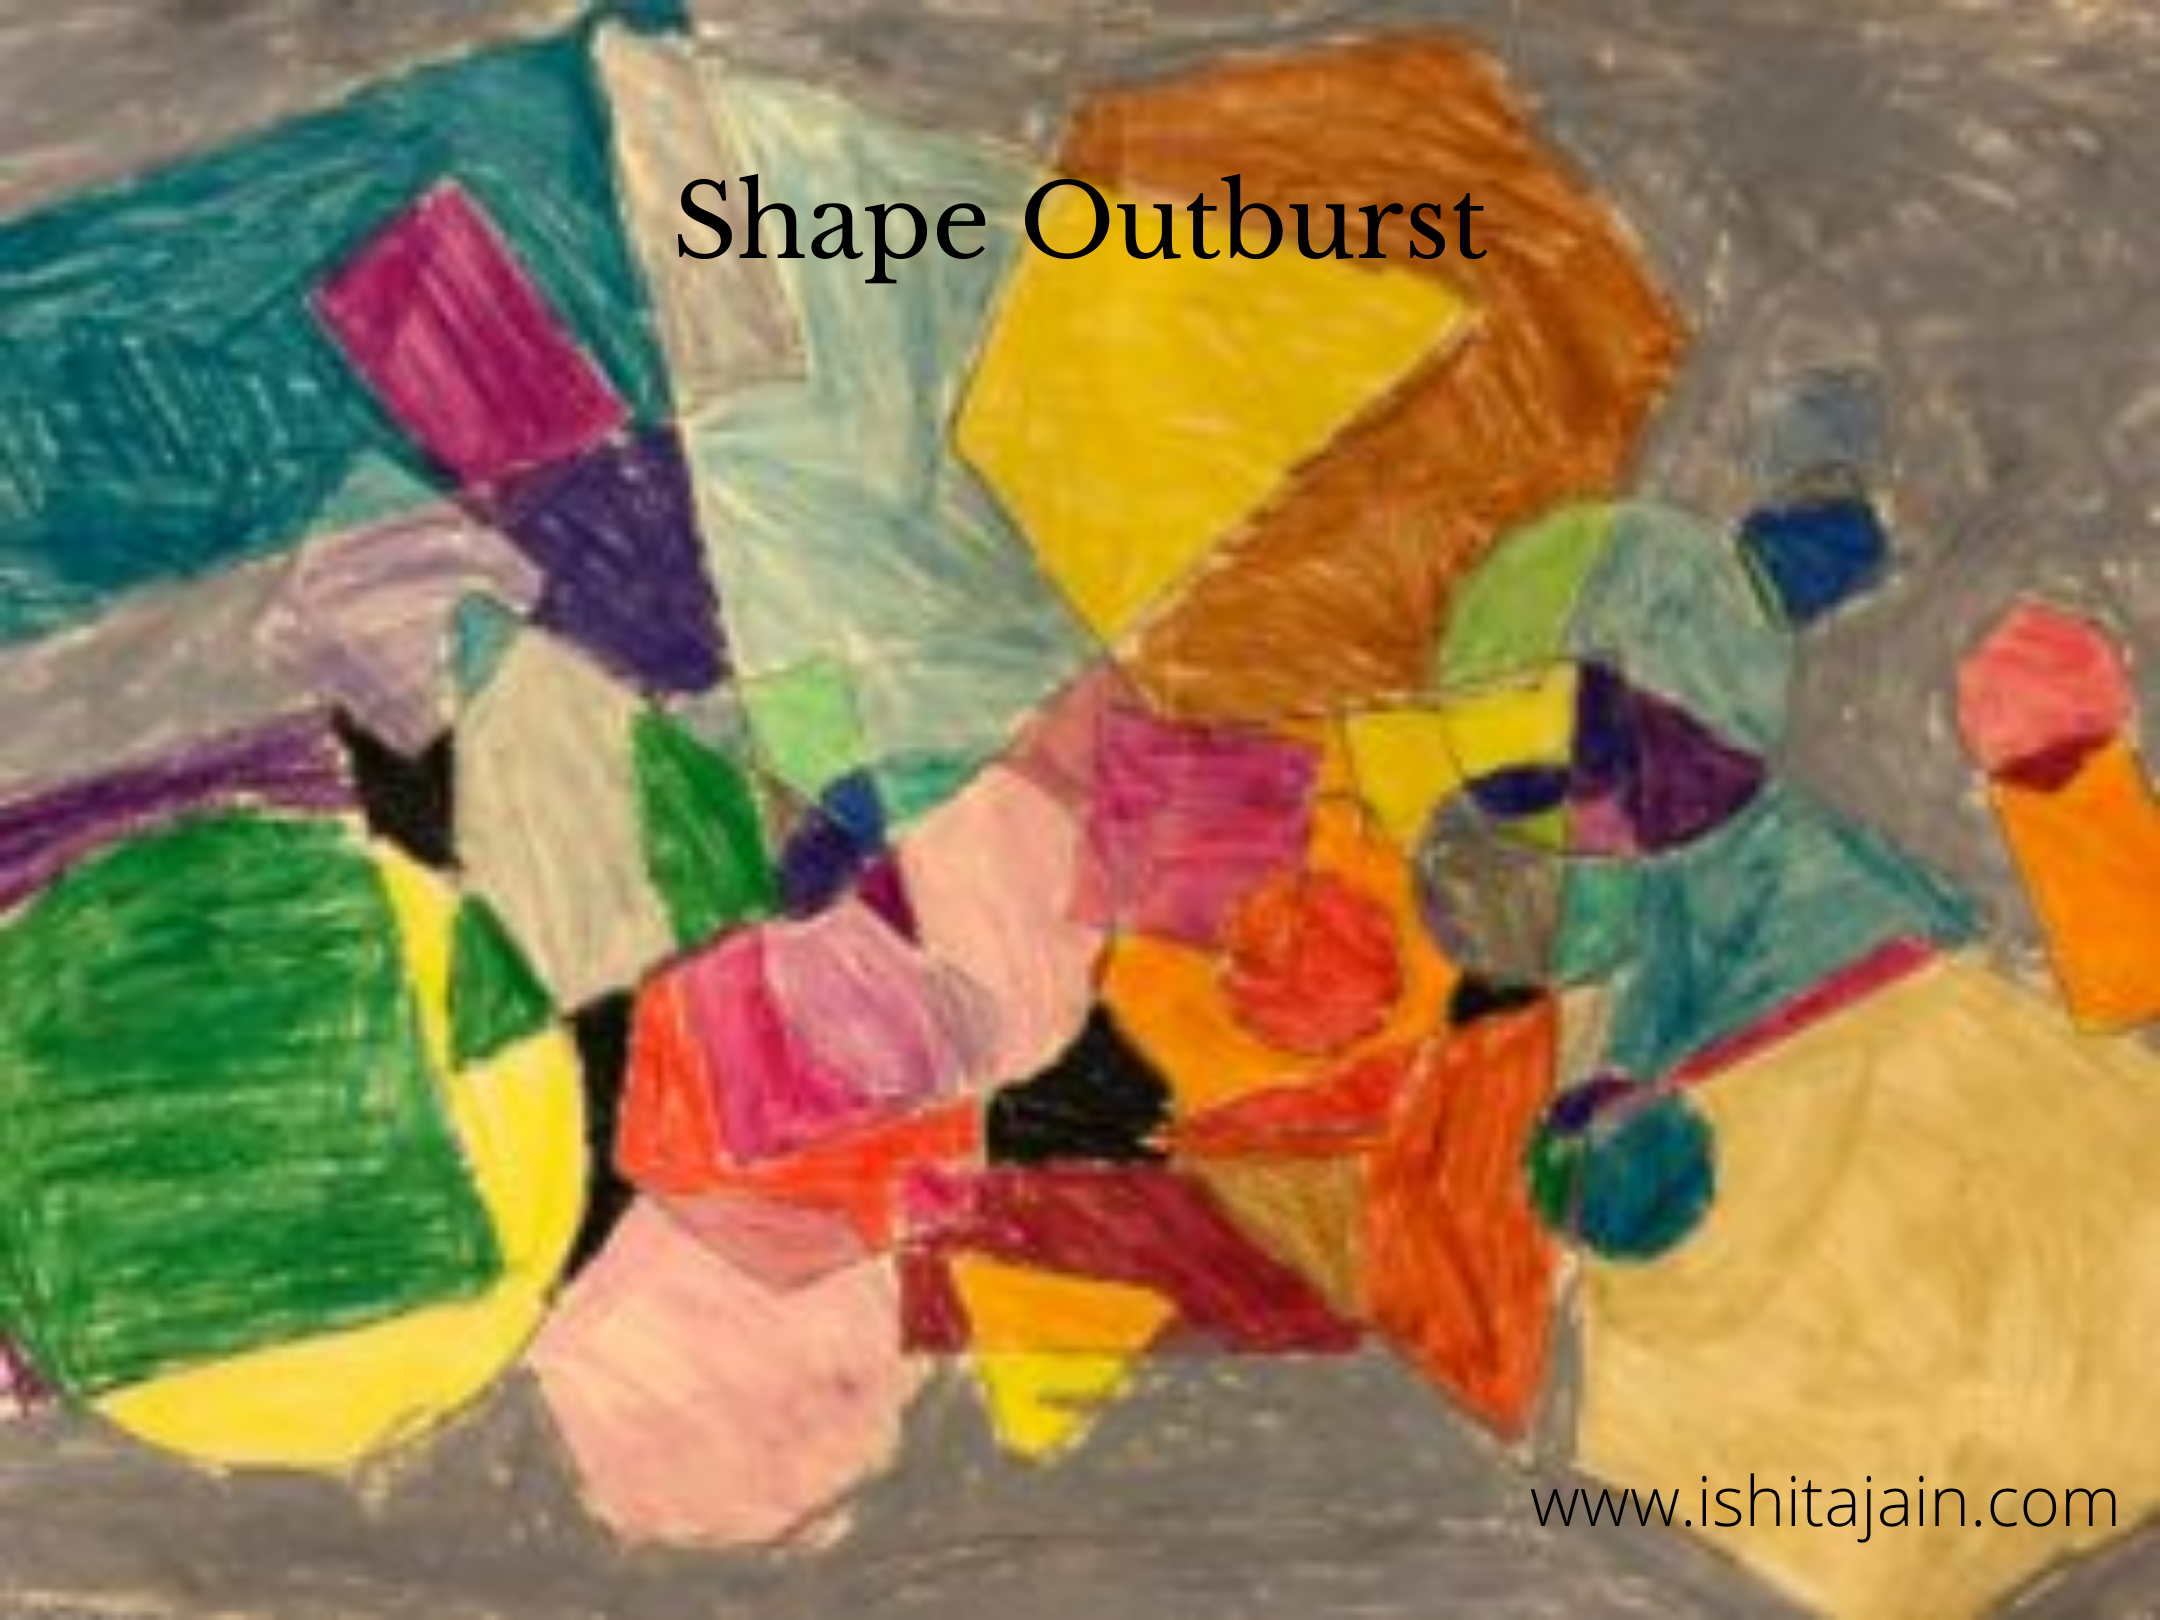 Post #6: Shape Outburst